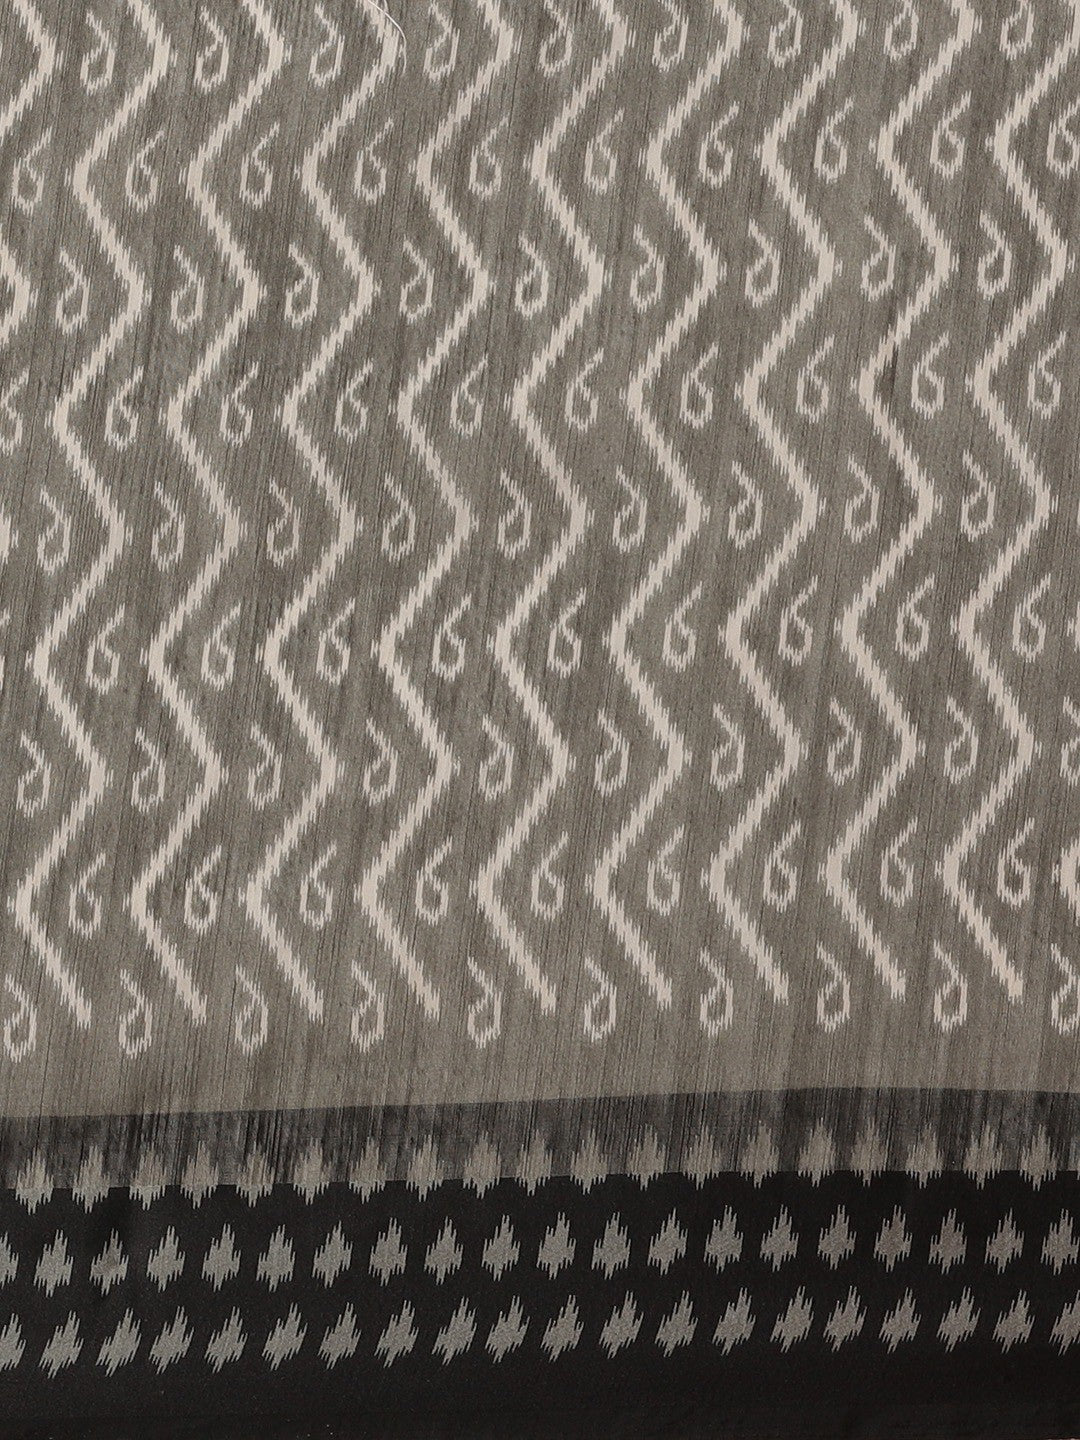 Women's Grey Cotton Silk Printed Saree - Ahika